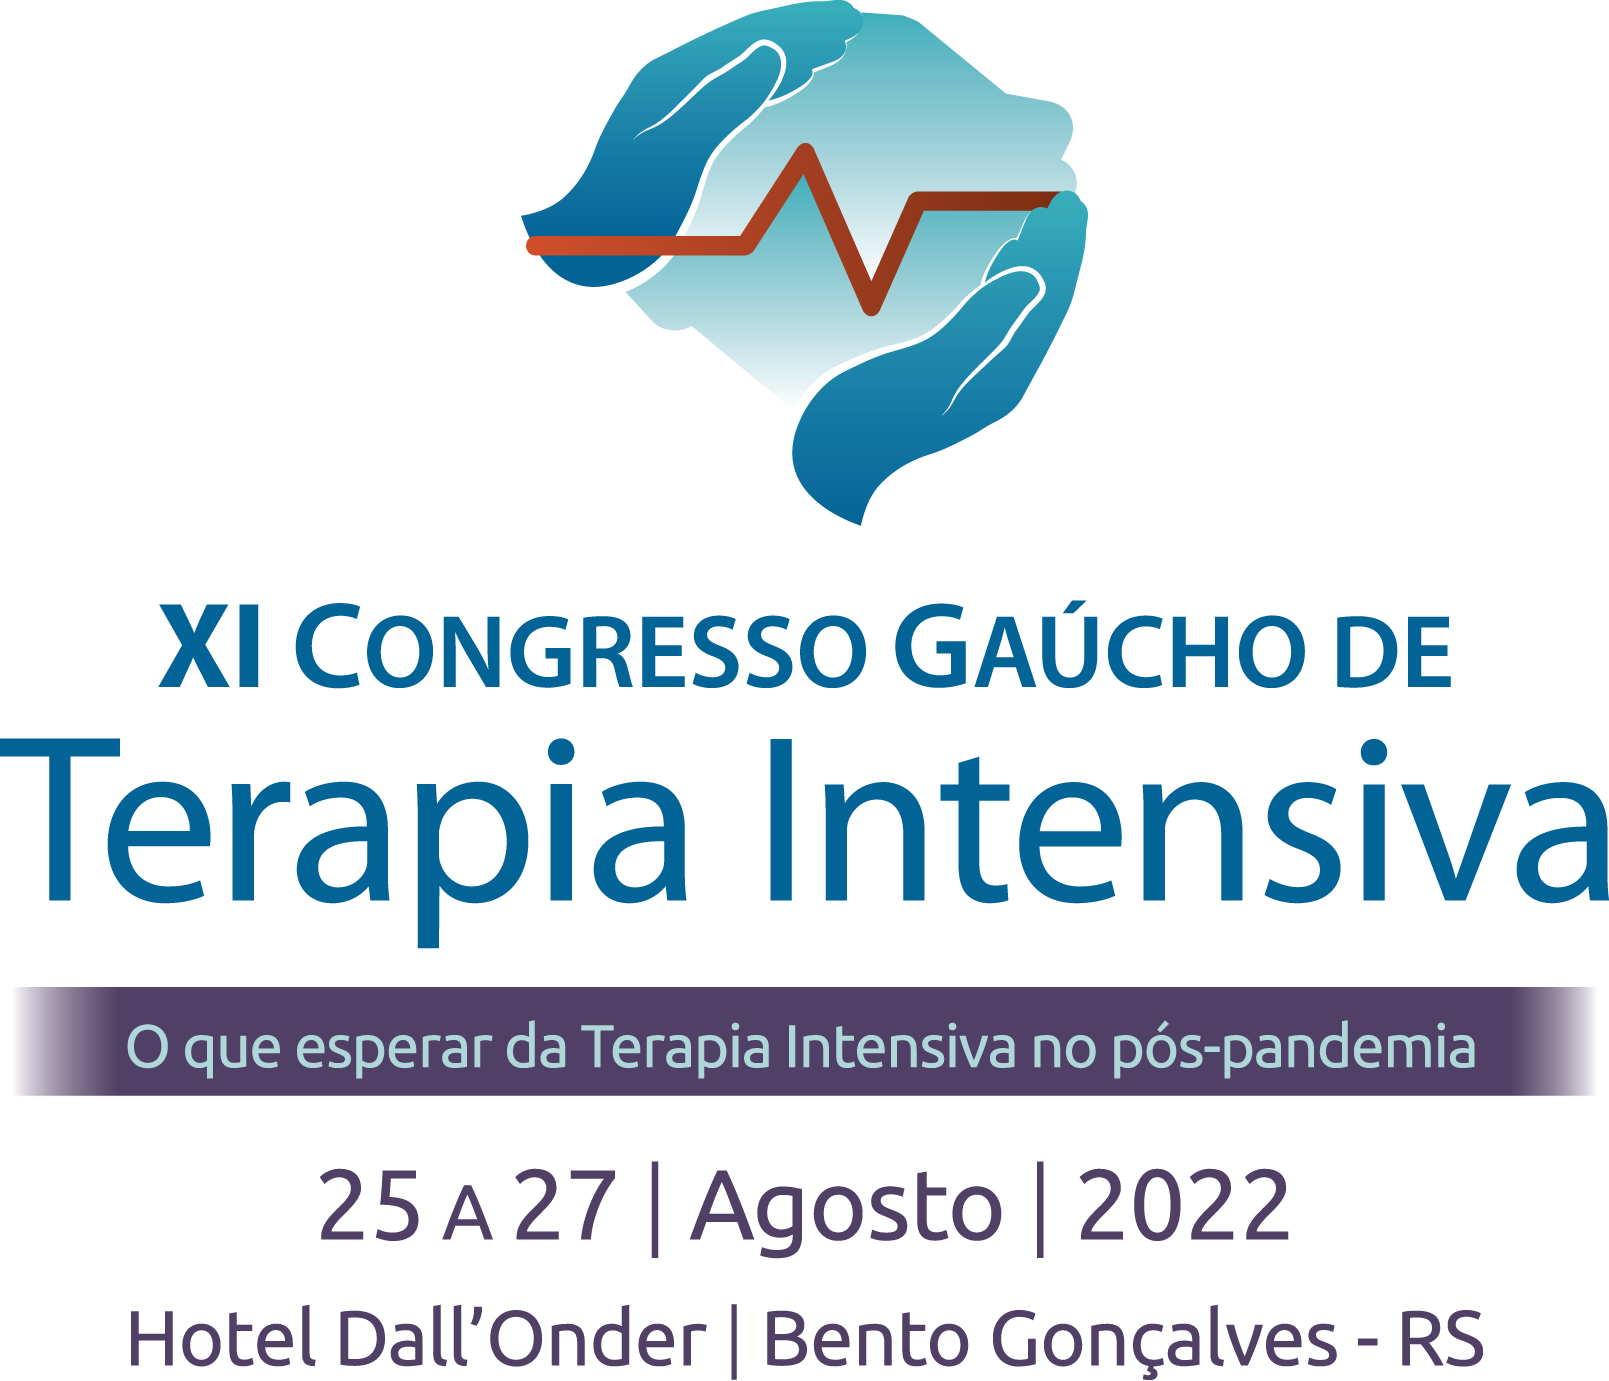 XI Congresso Gaúcho de Terapia Intensiva